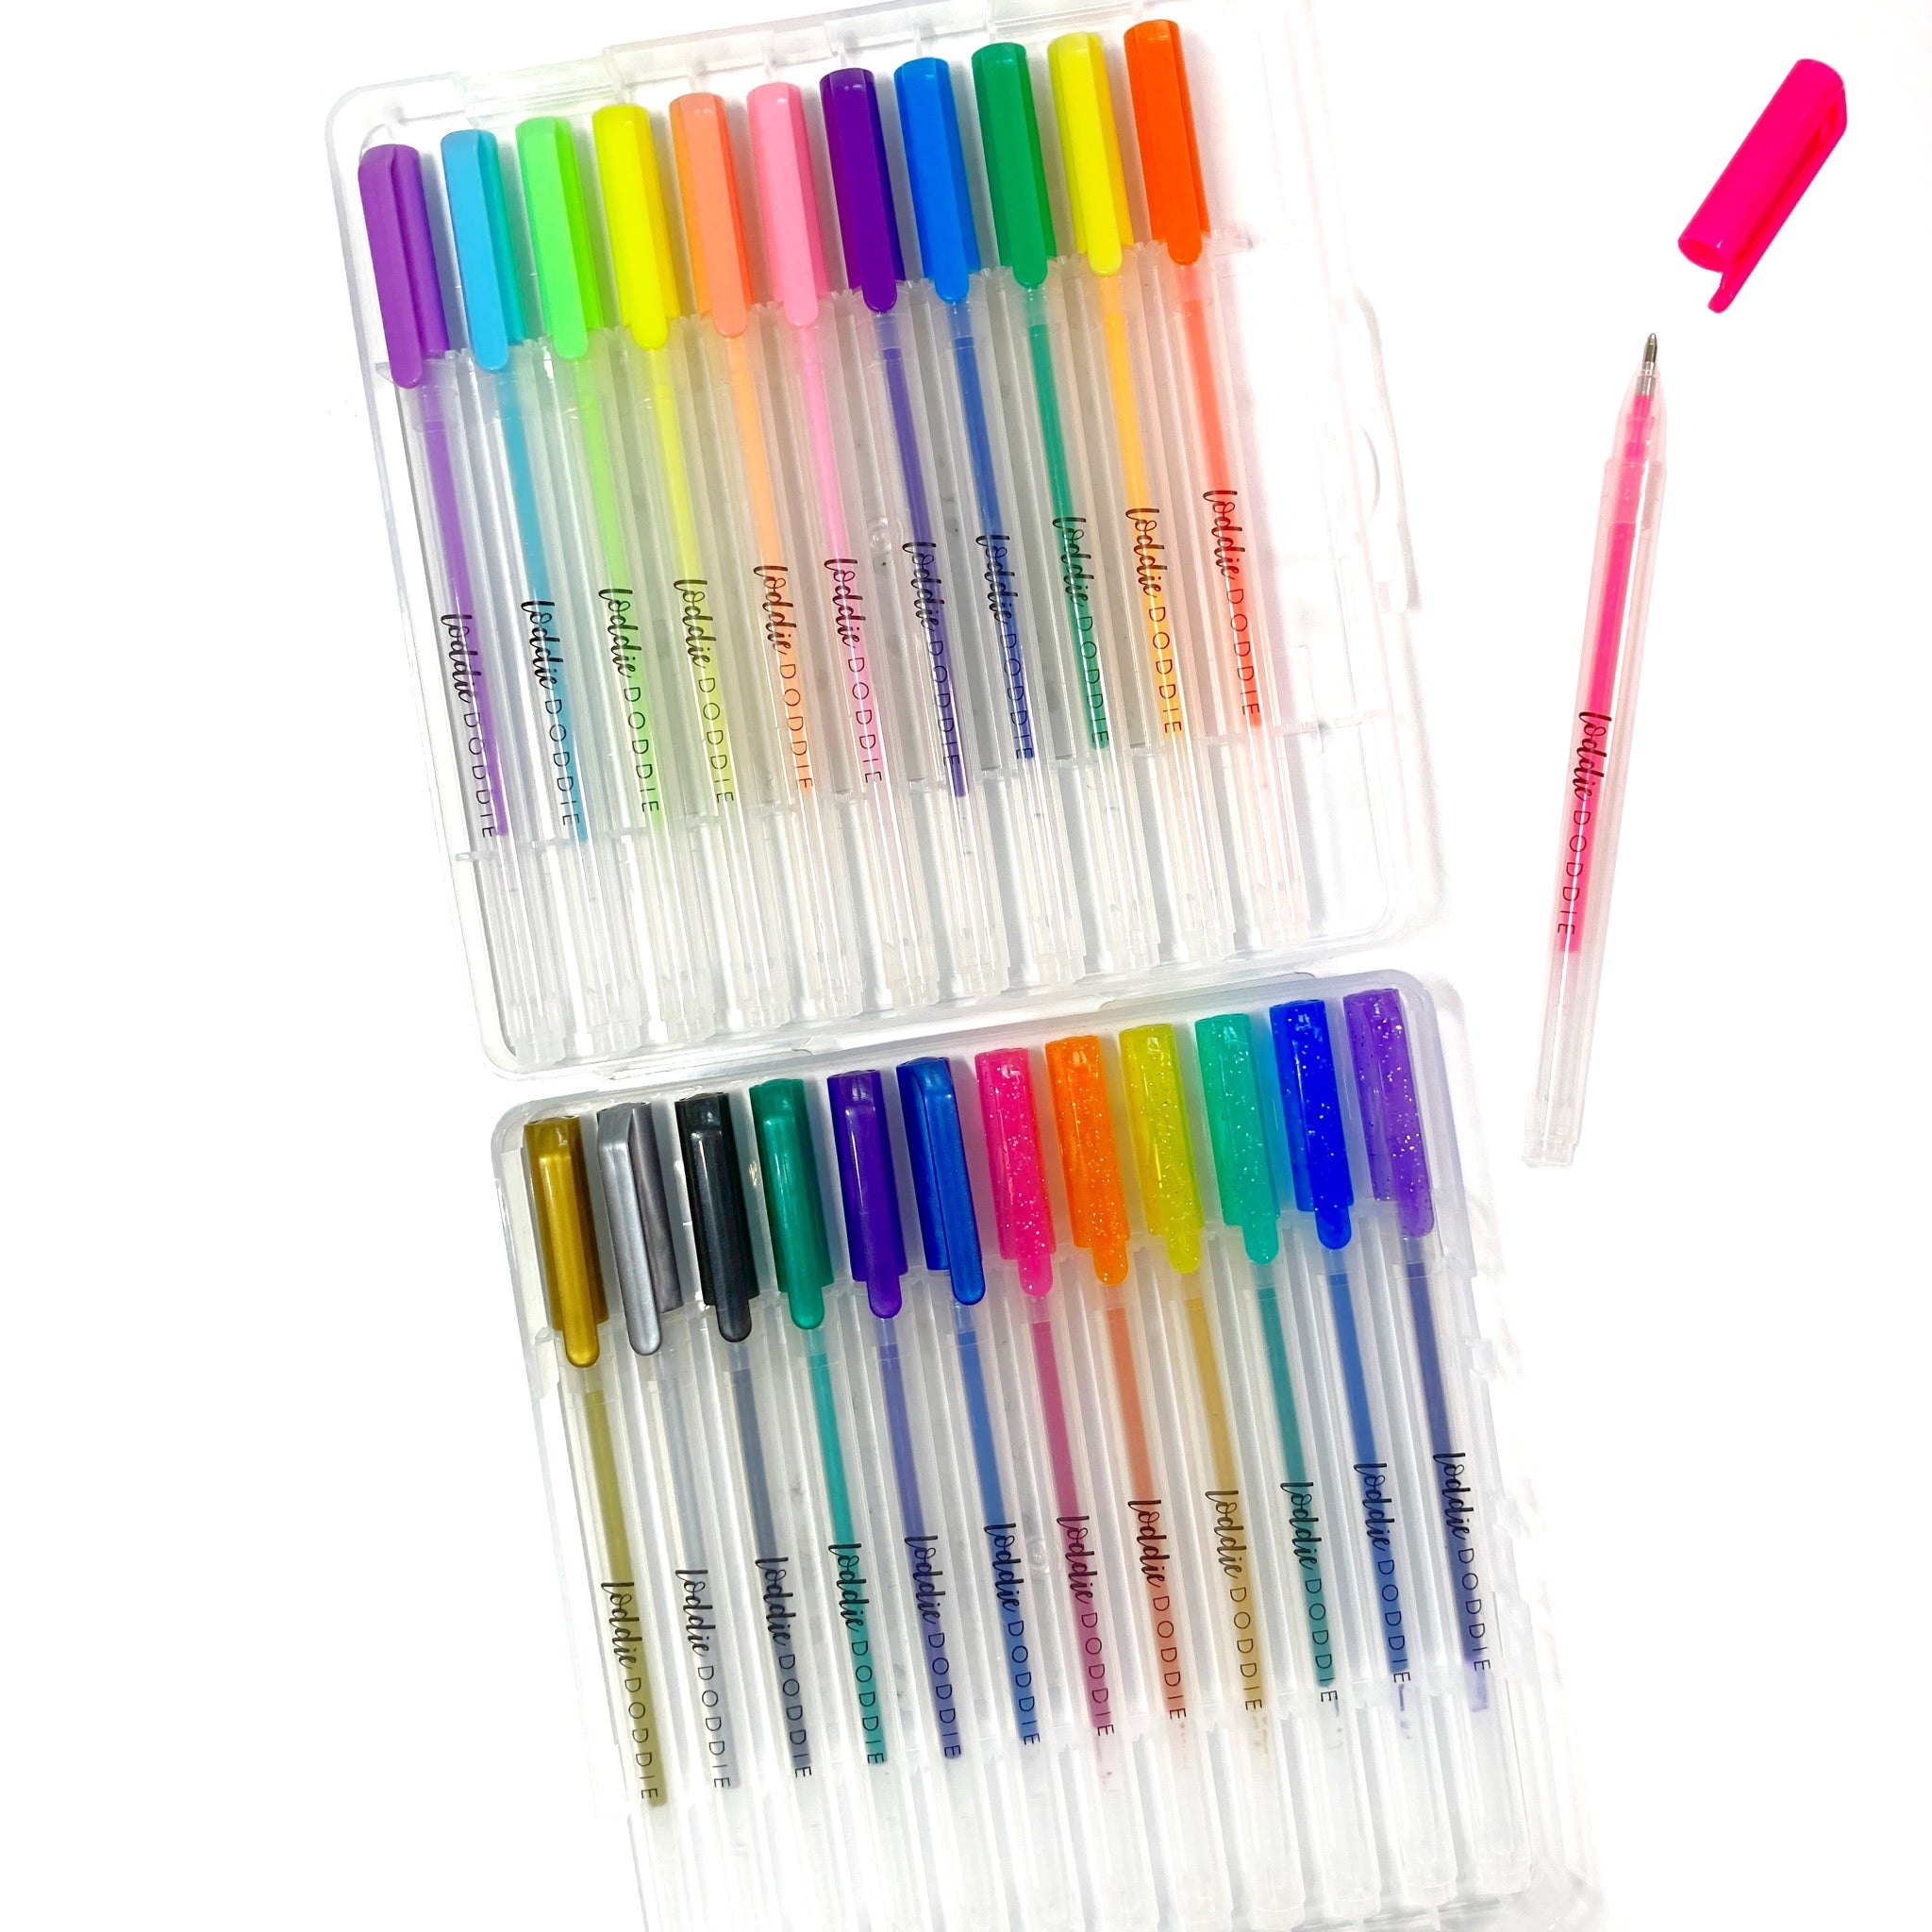 DasKid 240 Color Artist Gel Pen Set, includes 48 Glitter, 21 Metallic, 22  Pastel,18 Neon, 6 Rainbow, 5 Standard colors, 120 Matching Color Refills